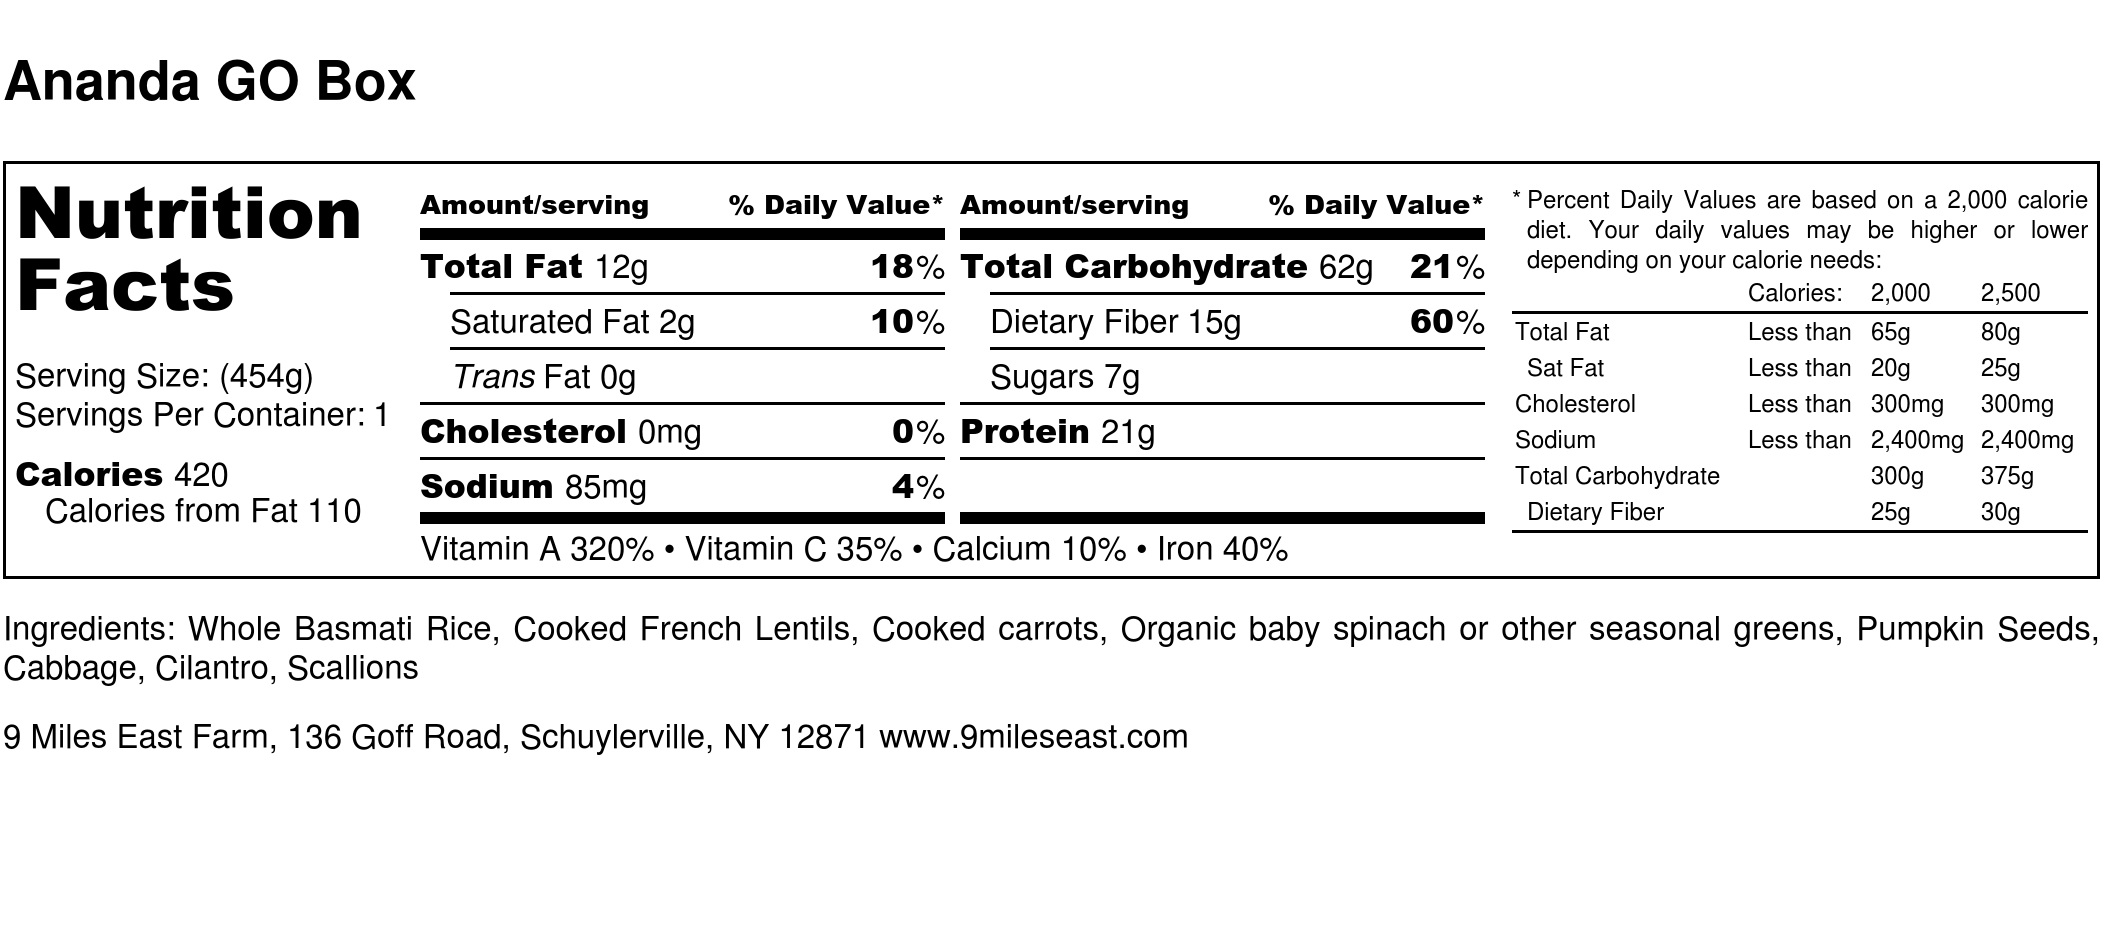 Ananda GO Box - Nutrition Label.jpg